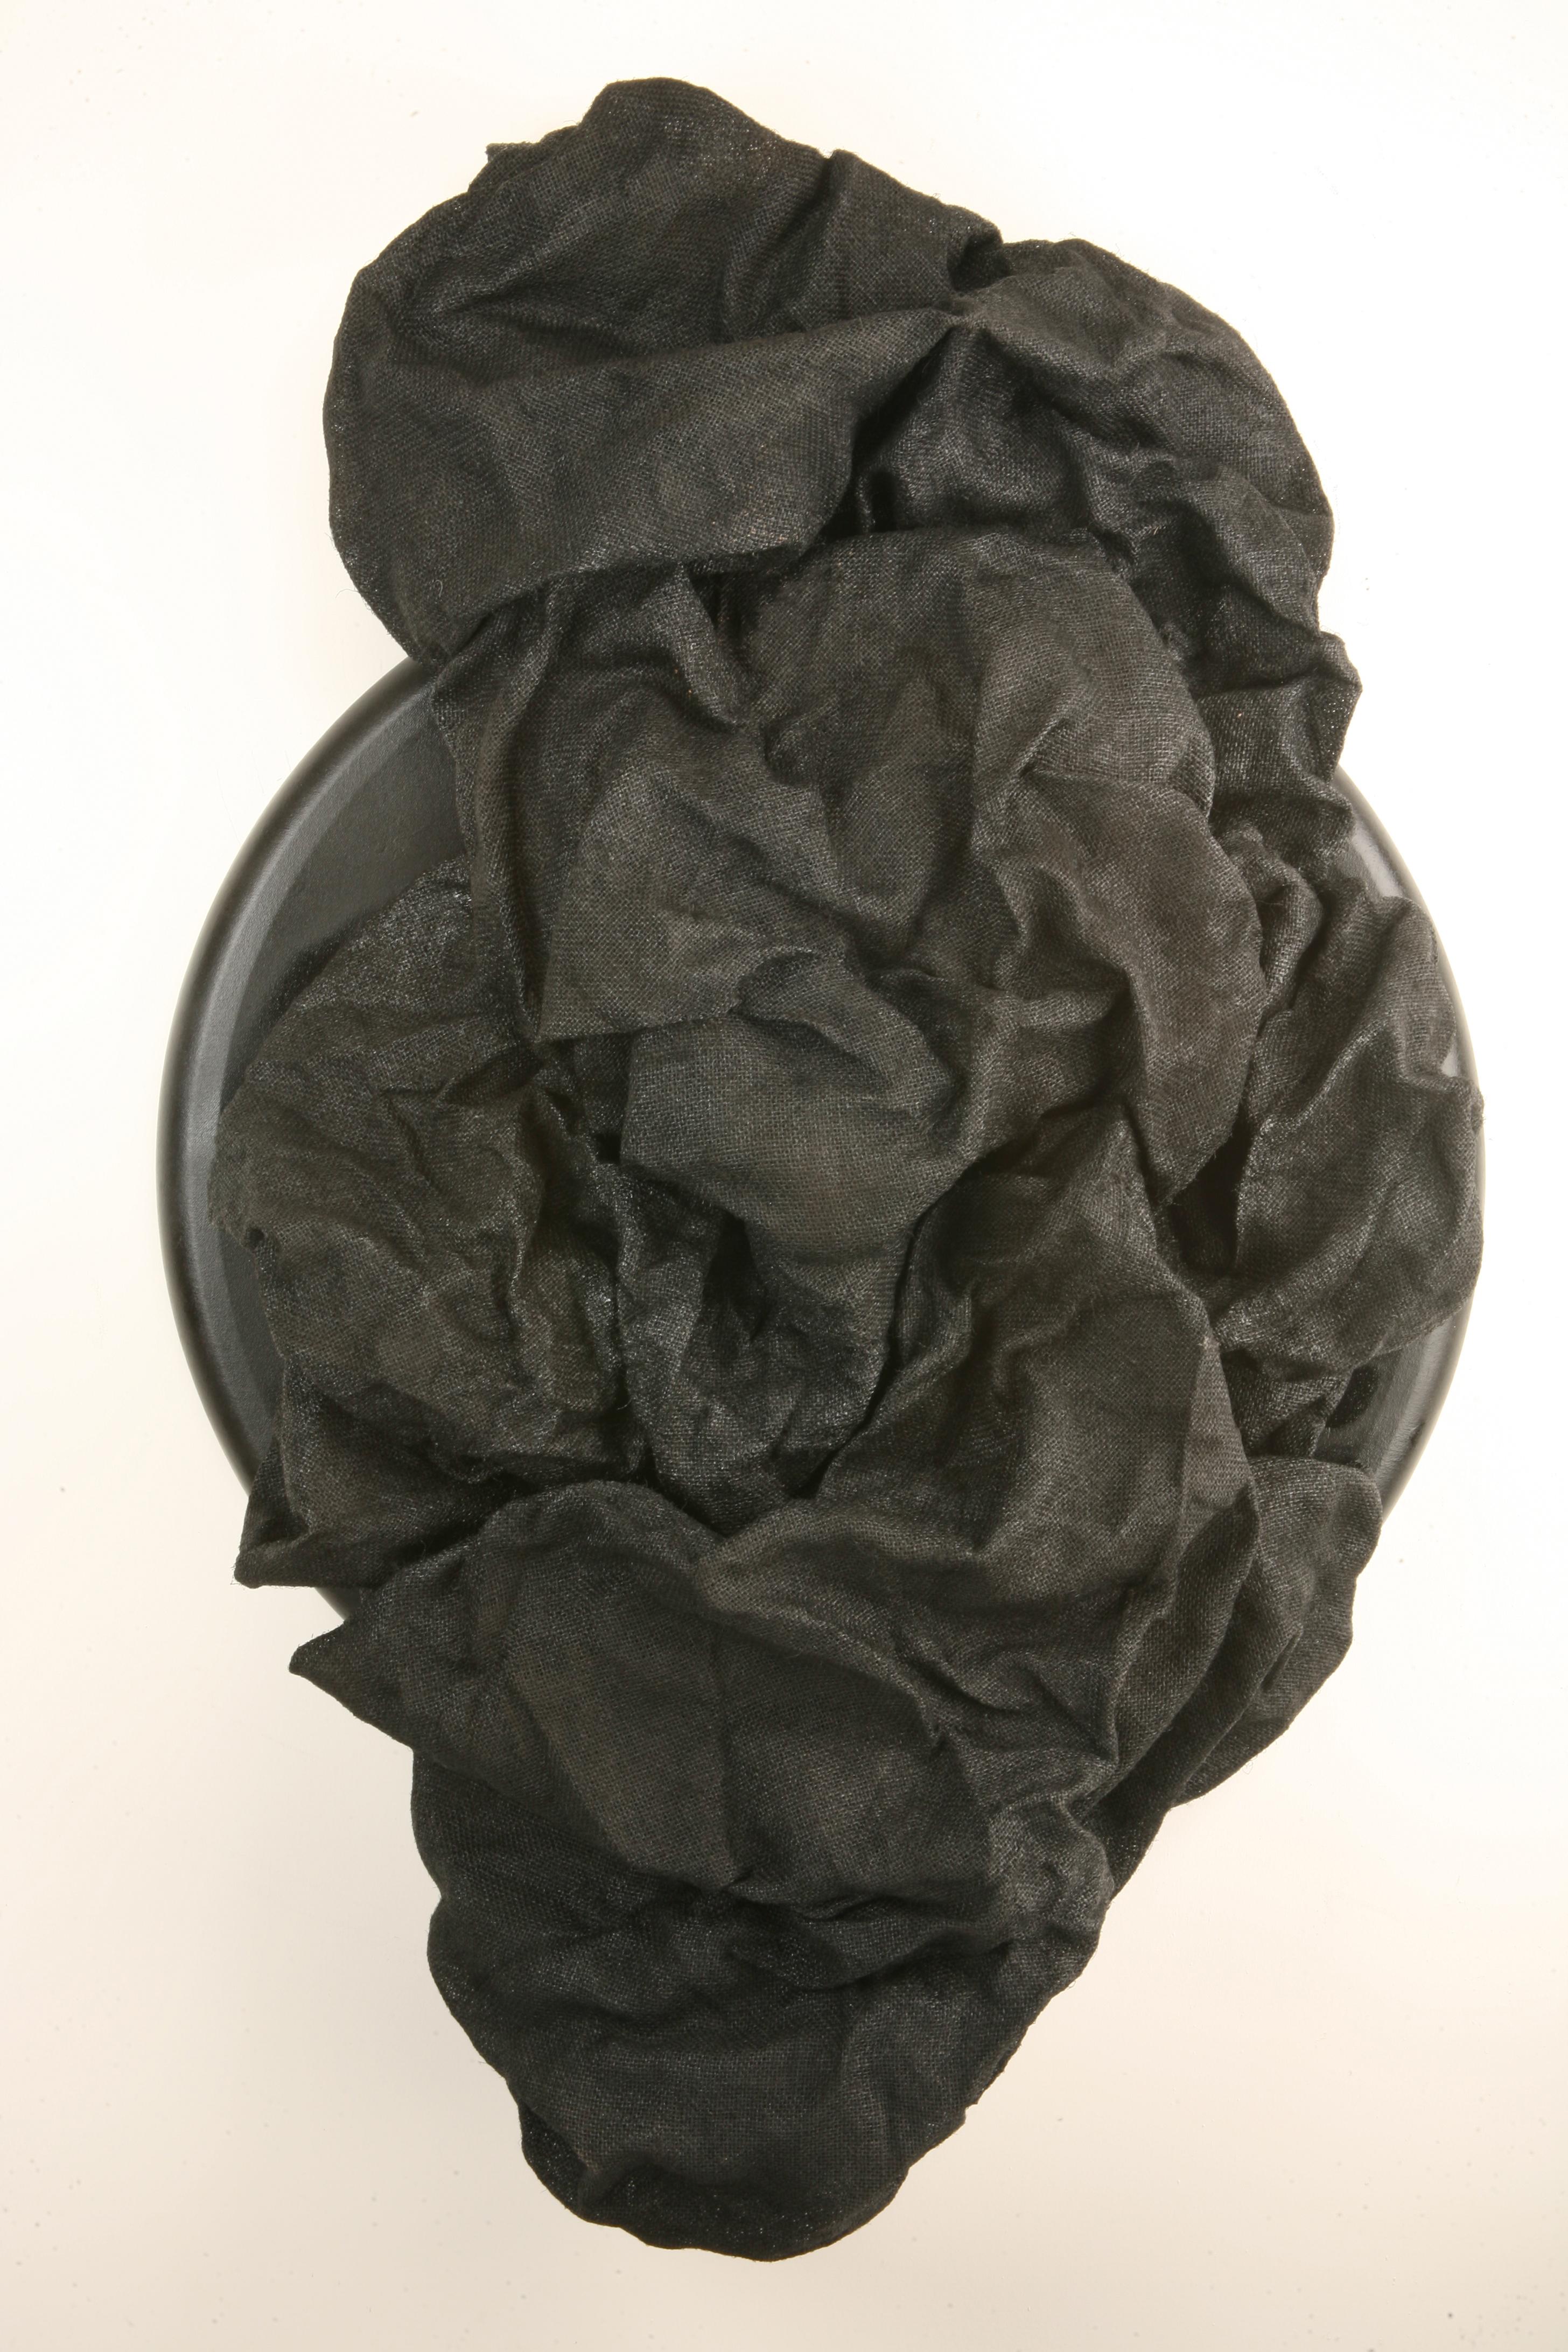 "Black Folds" Wall sculpture- fabric, monochrome, monochromatic, elegant, bold - Mixed Media Art by Chloe Hedden